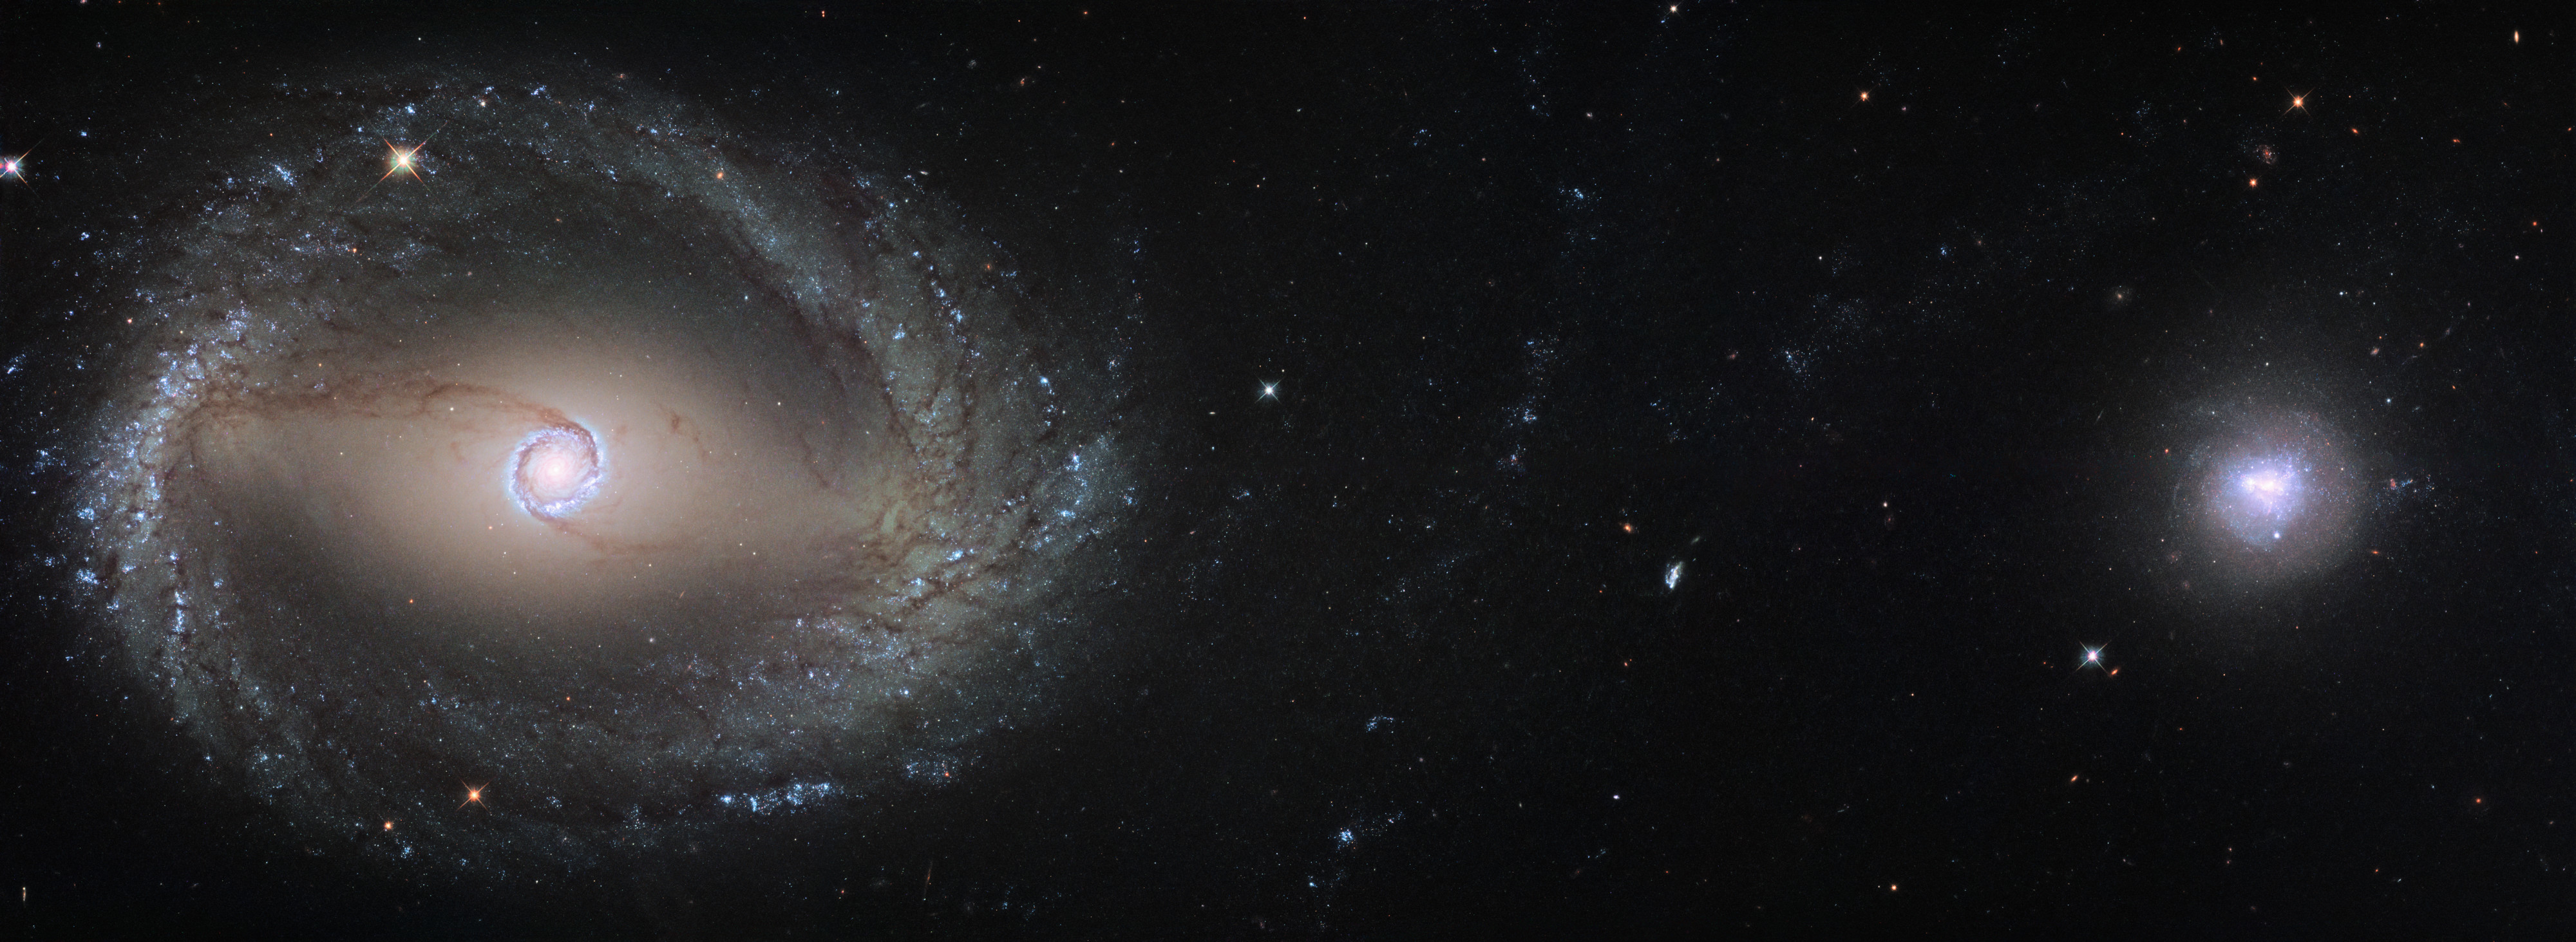 ordinary vs barred spiral galaxy